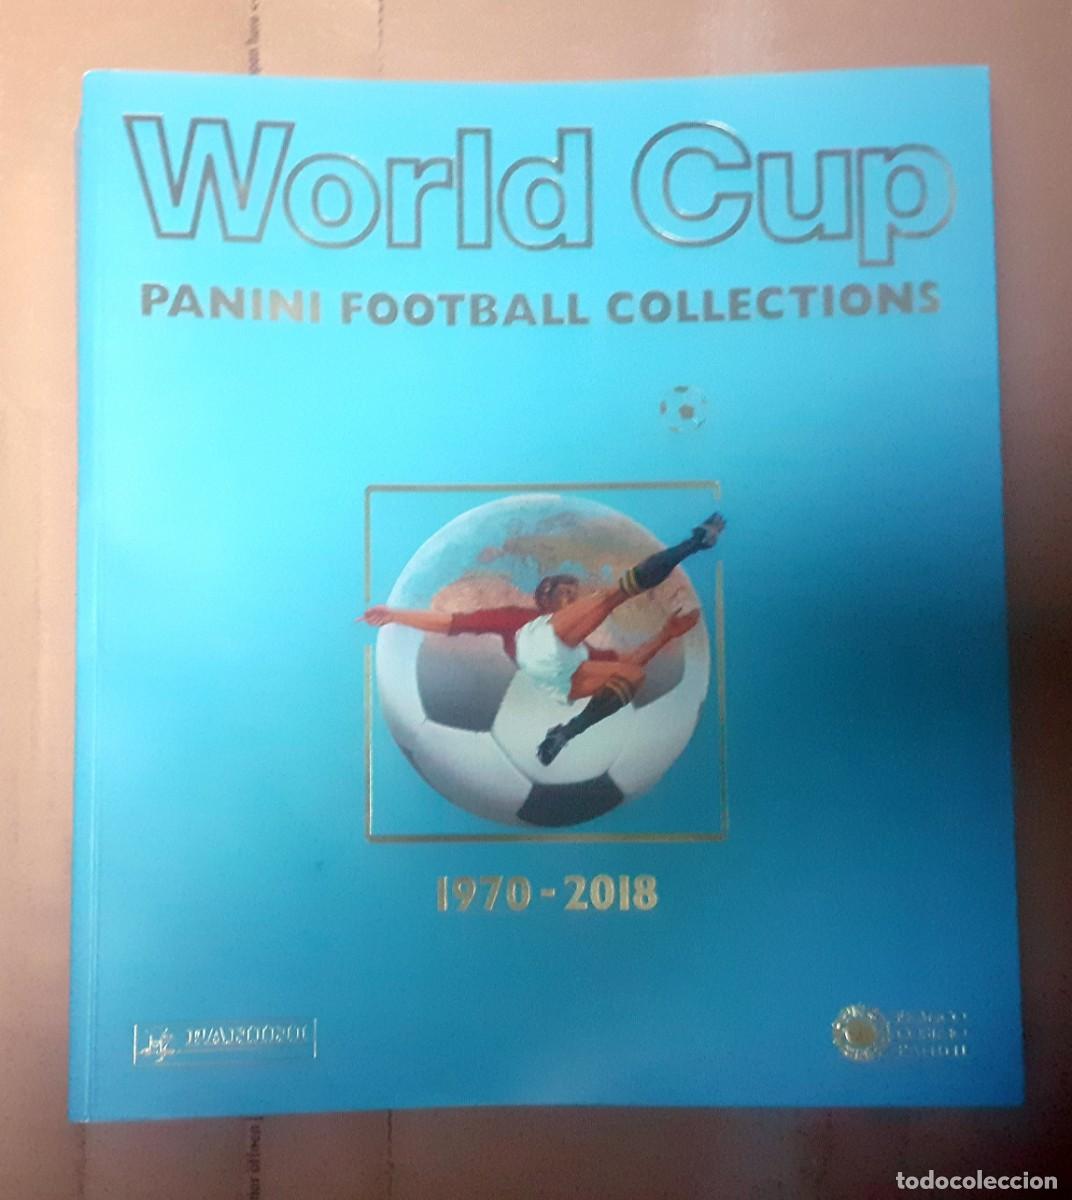 album del mundial de futbol – Compra album del mundial de futbol